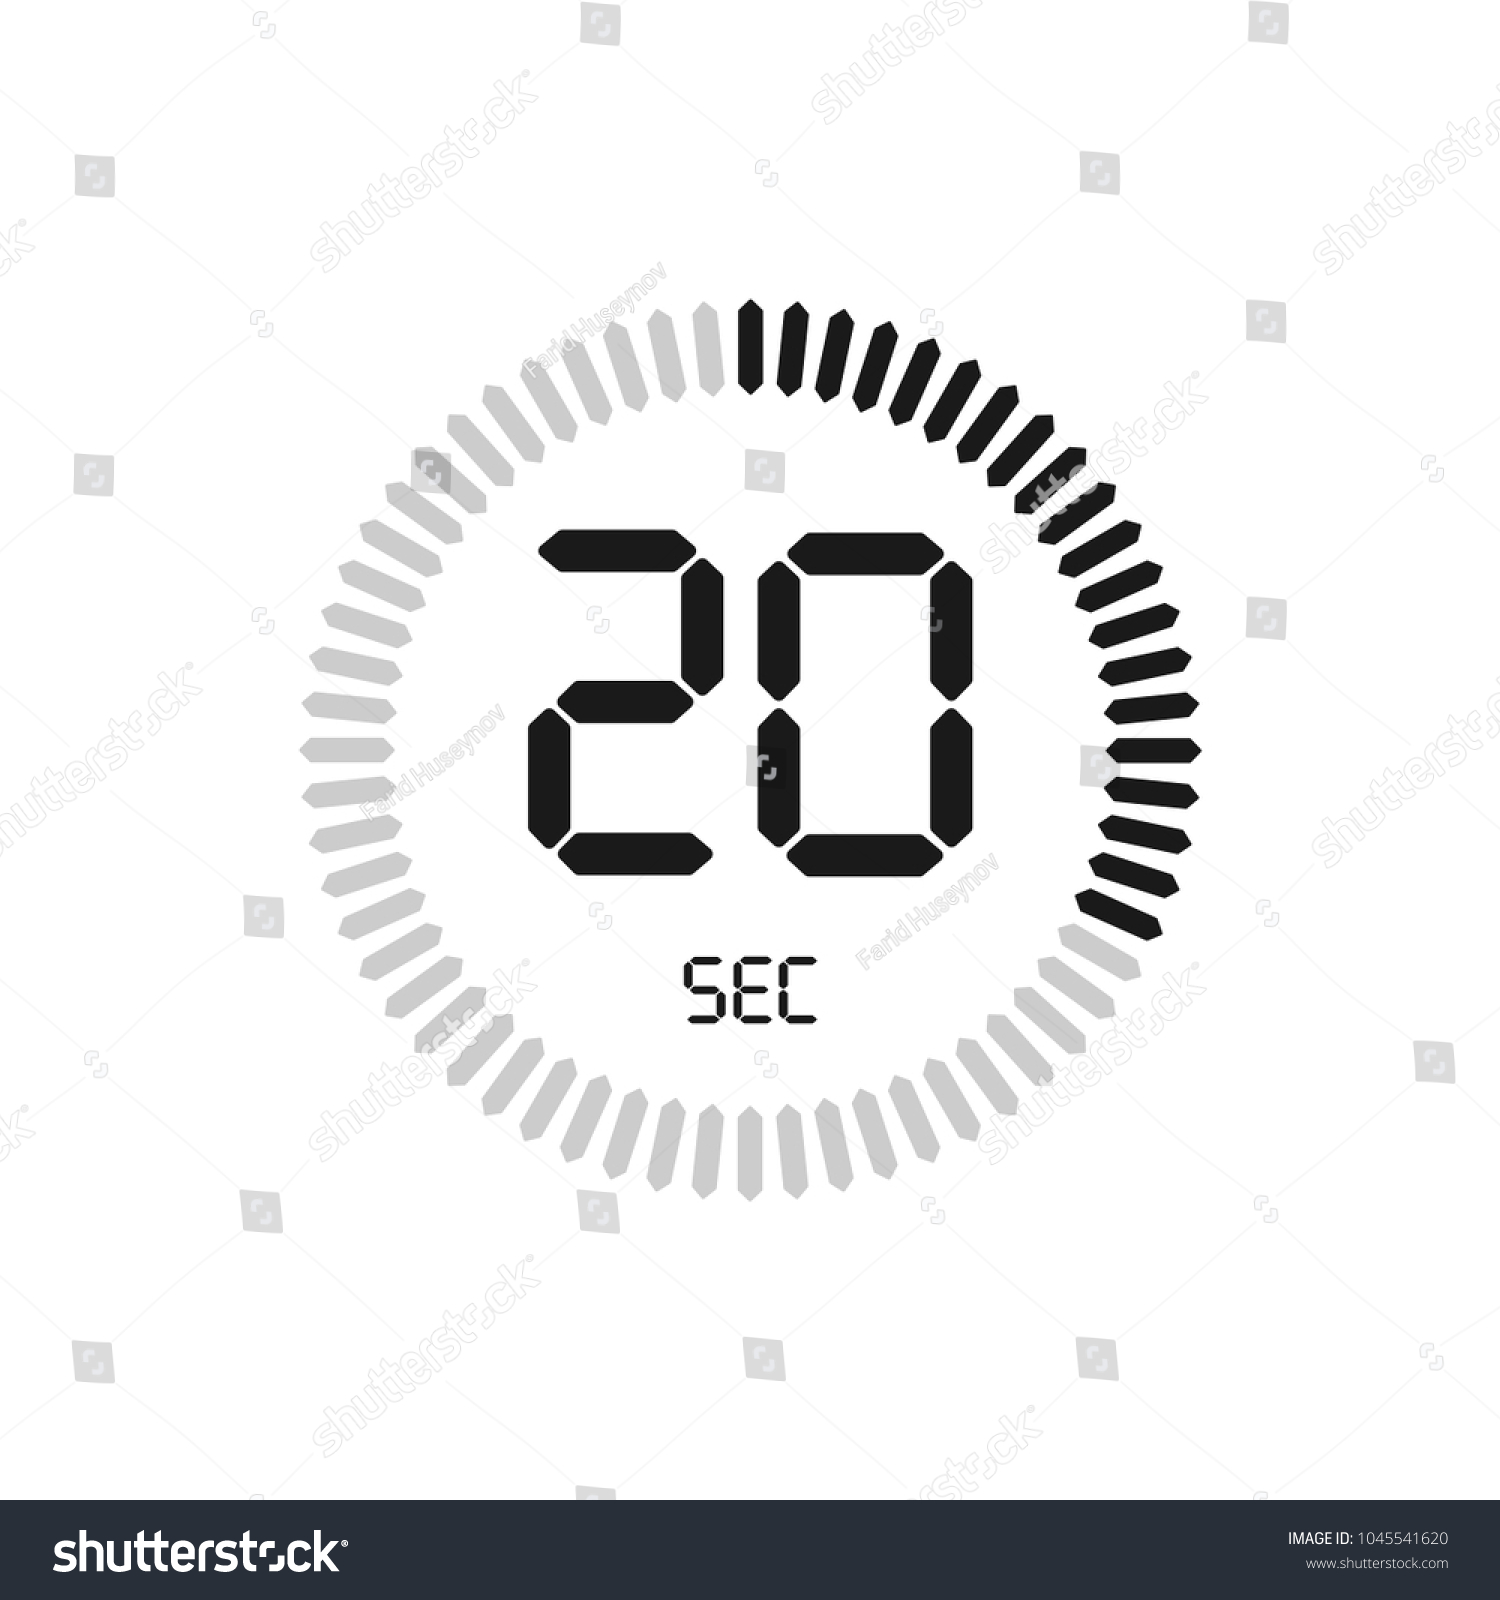 19 минут 20 секунд. Цифровой таймер вектор. Часы 30 секунд. Секундомер 30 секунд. Значок секундомера.